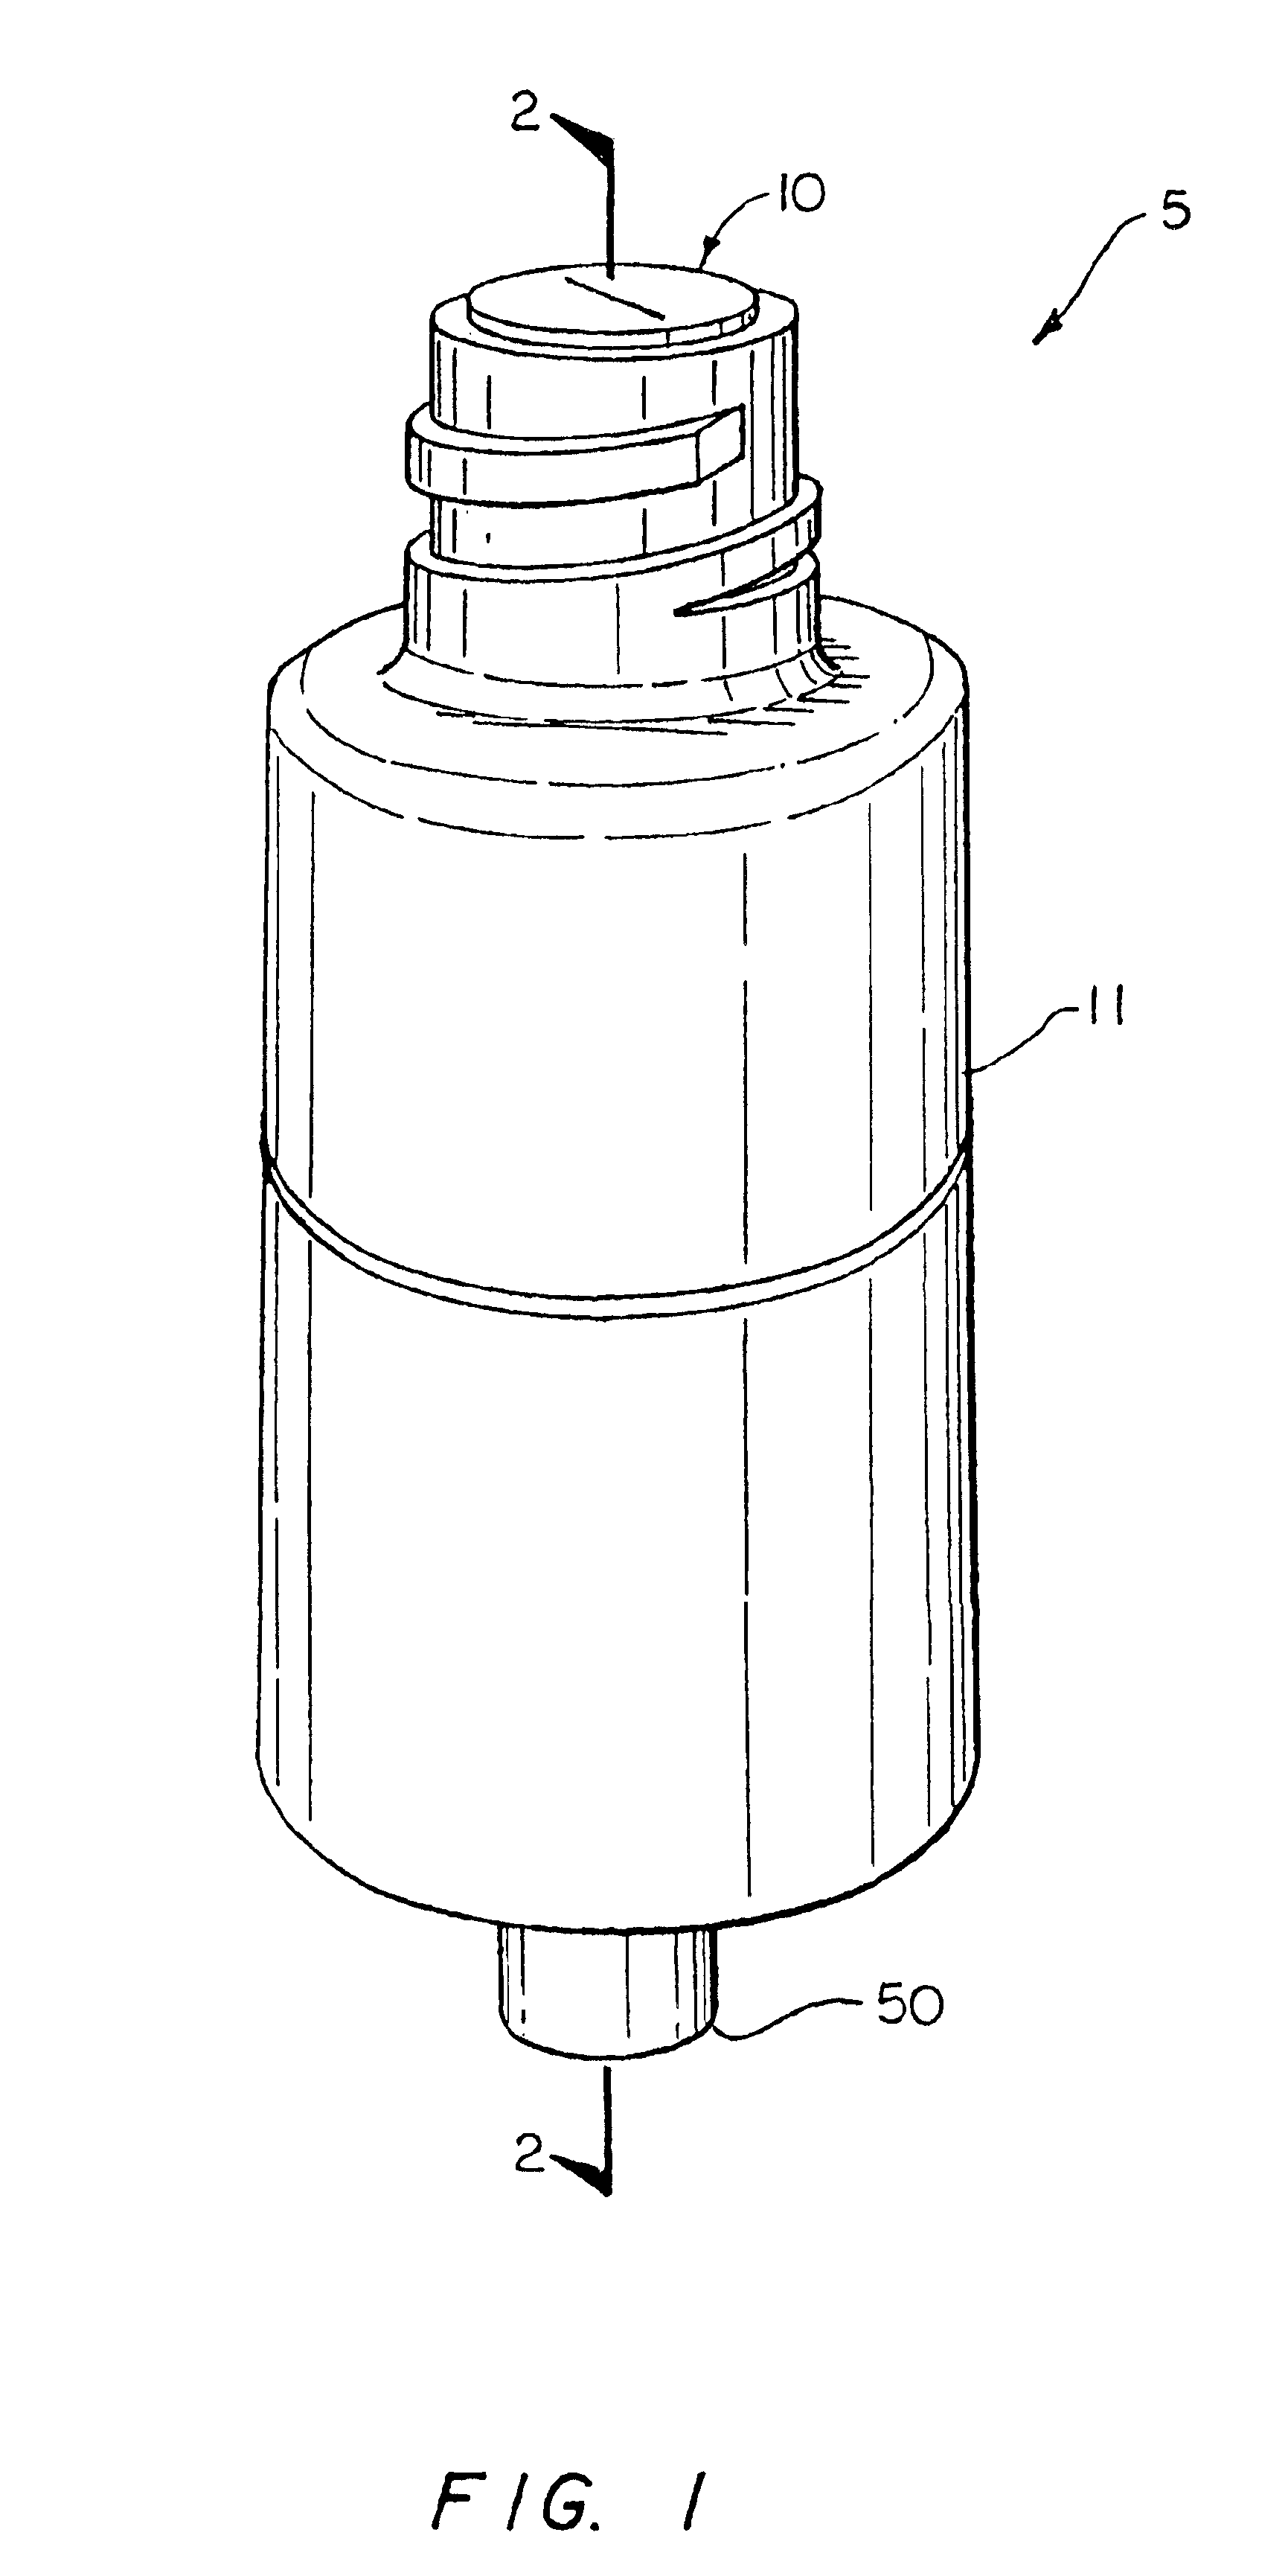 Apparatus for reducing fluid drawback through a medical valve